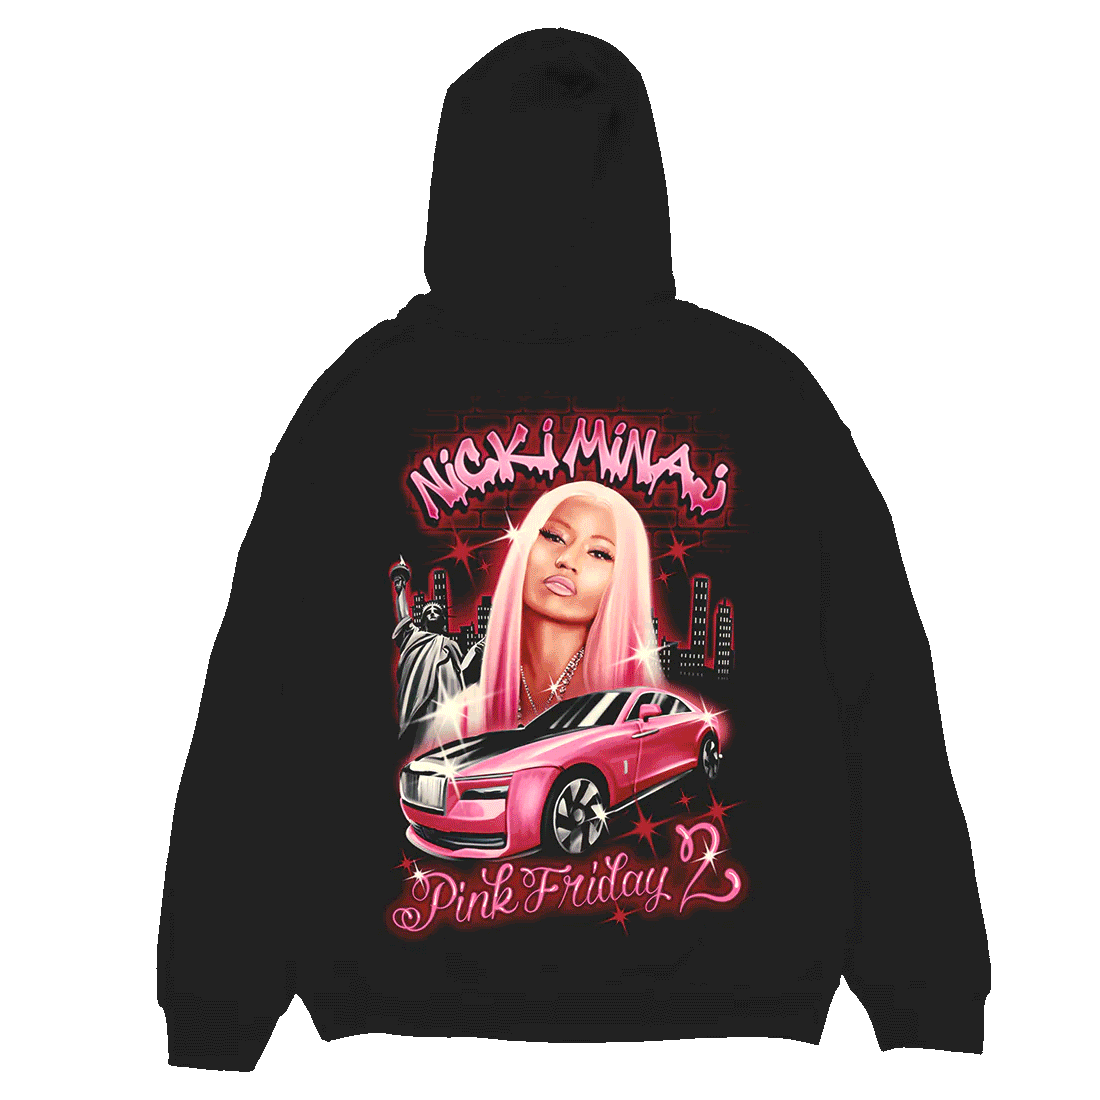 image linked to Nicki Minaj Official Store